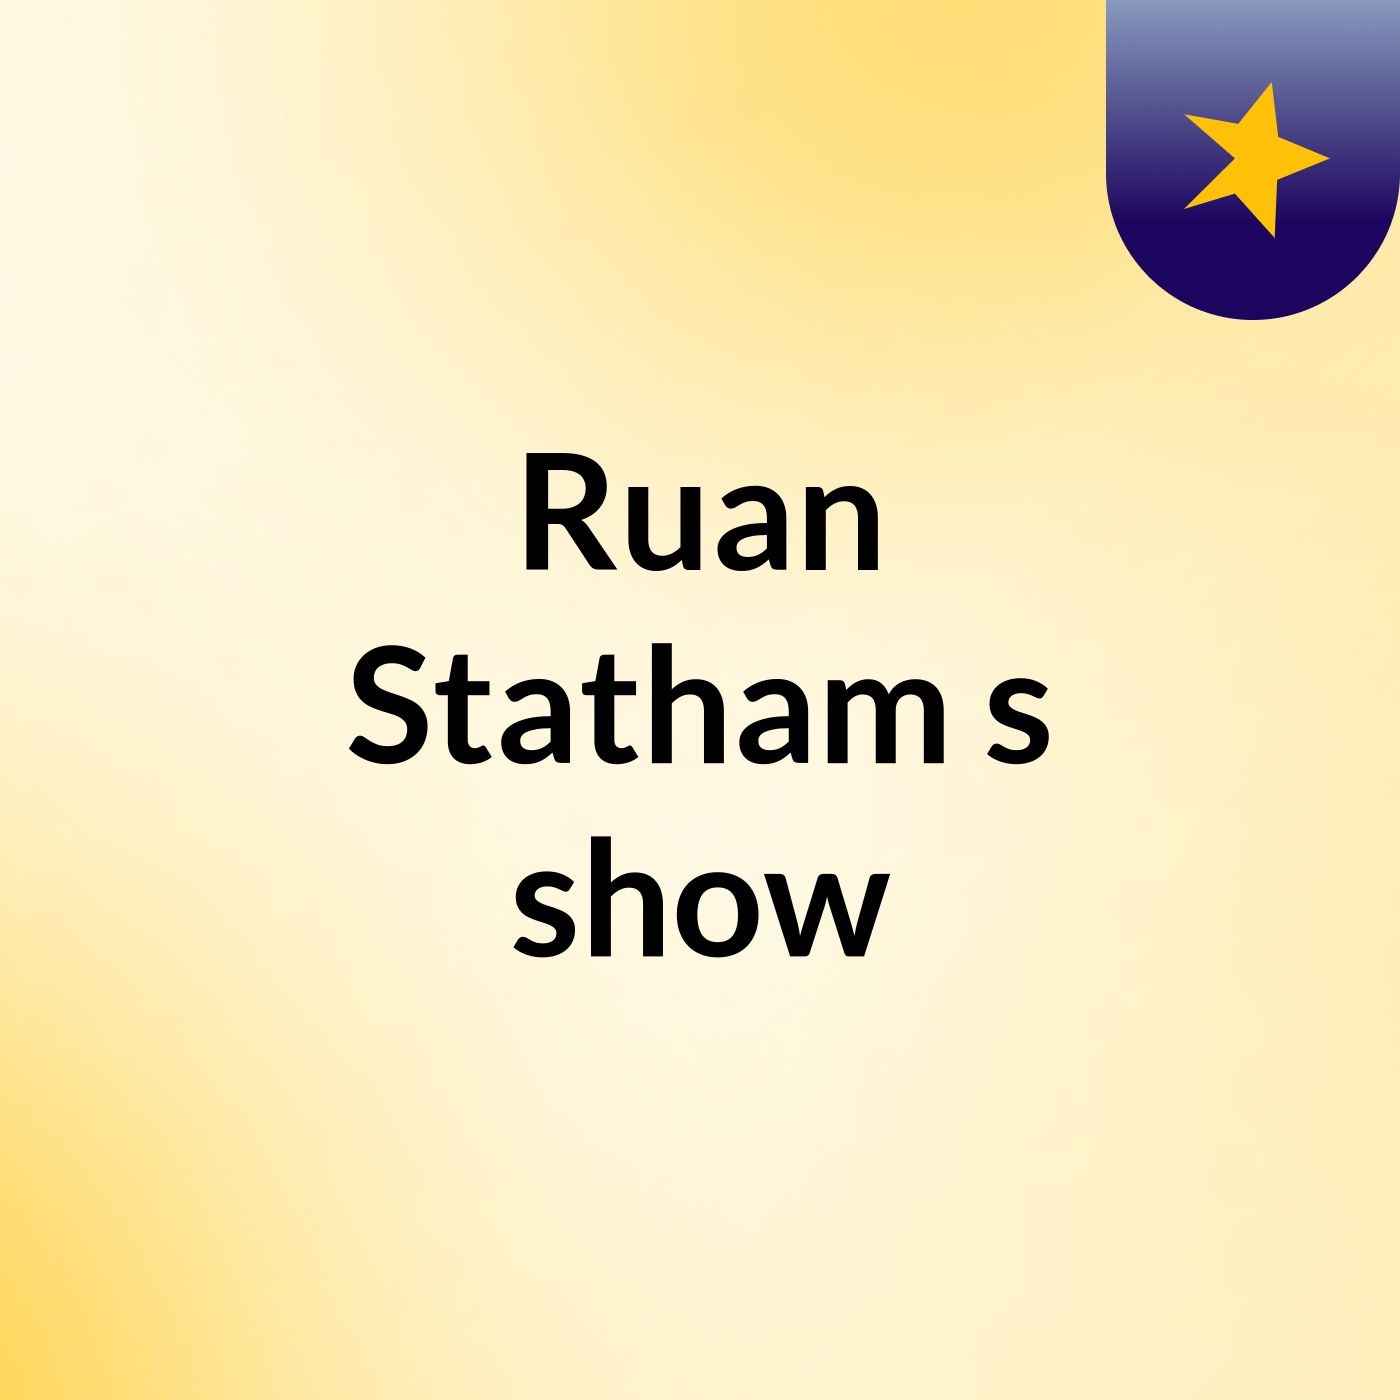 Ruan Statham's show